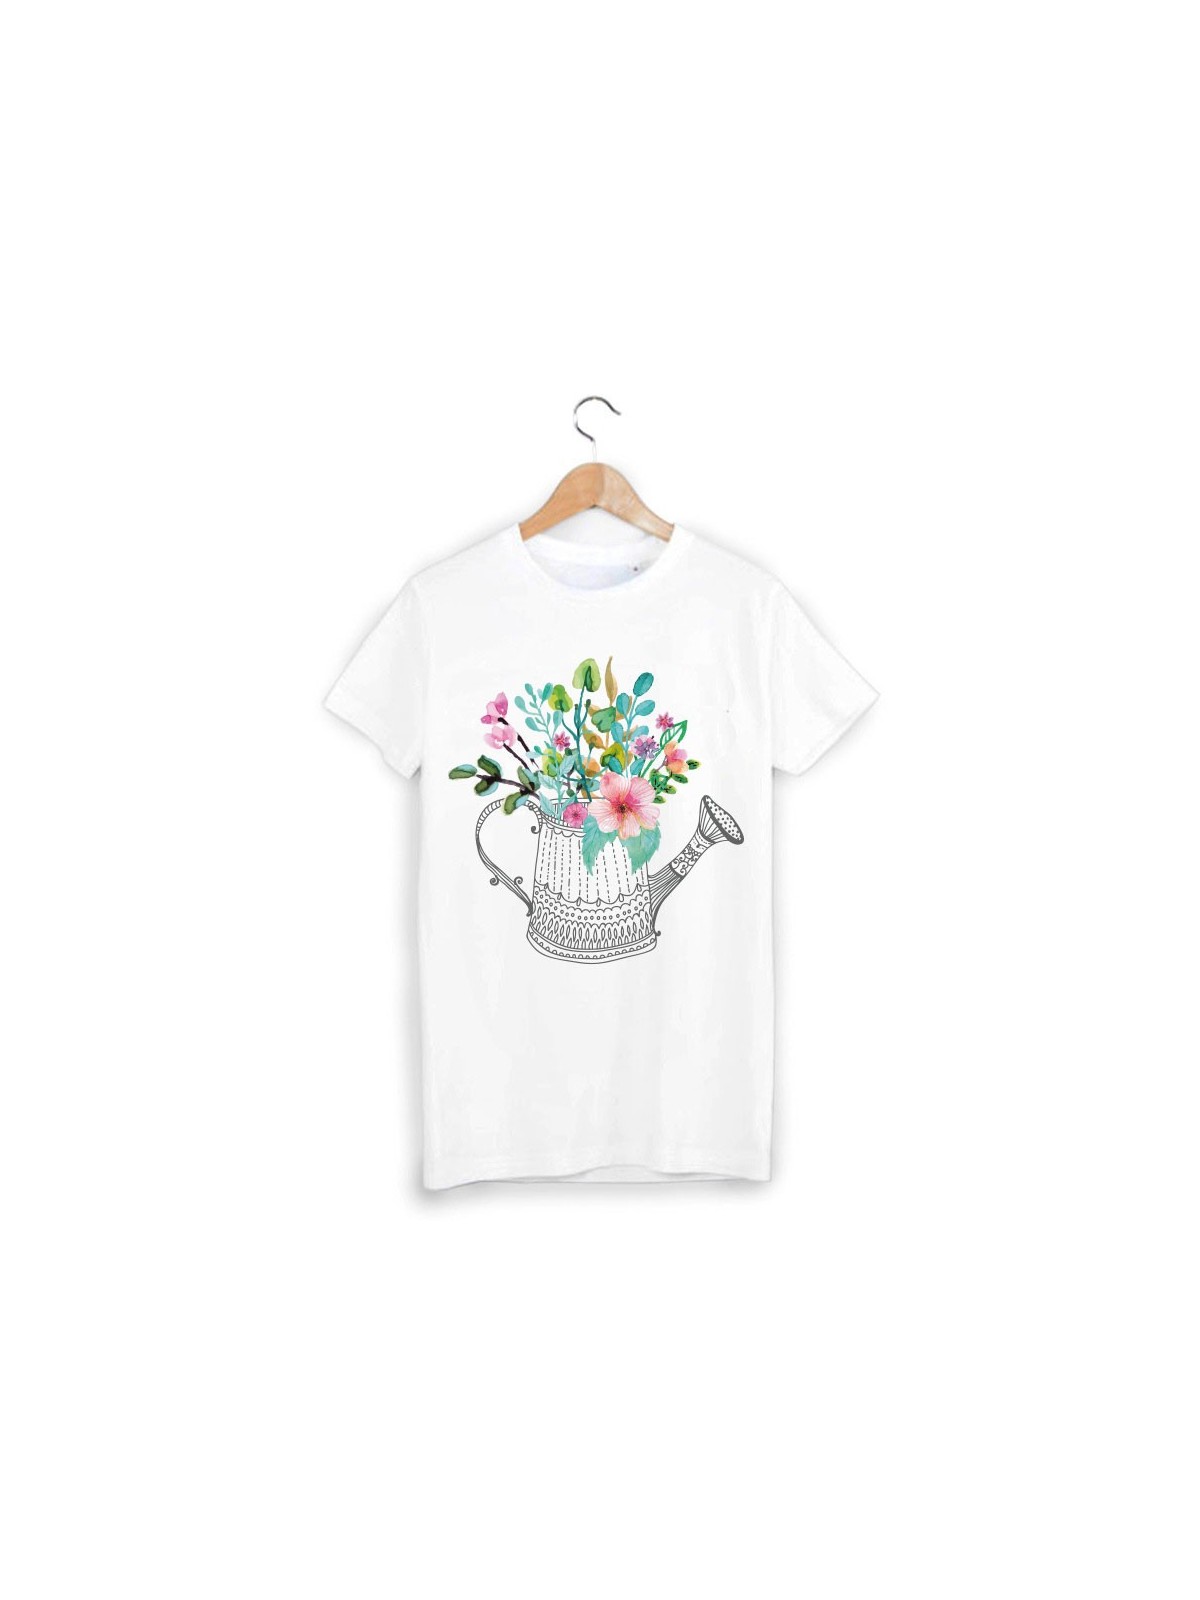 T-Shirt illustrÃ© fleur ref 1448